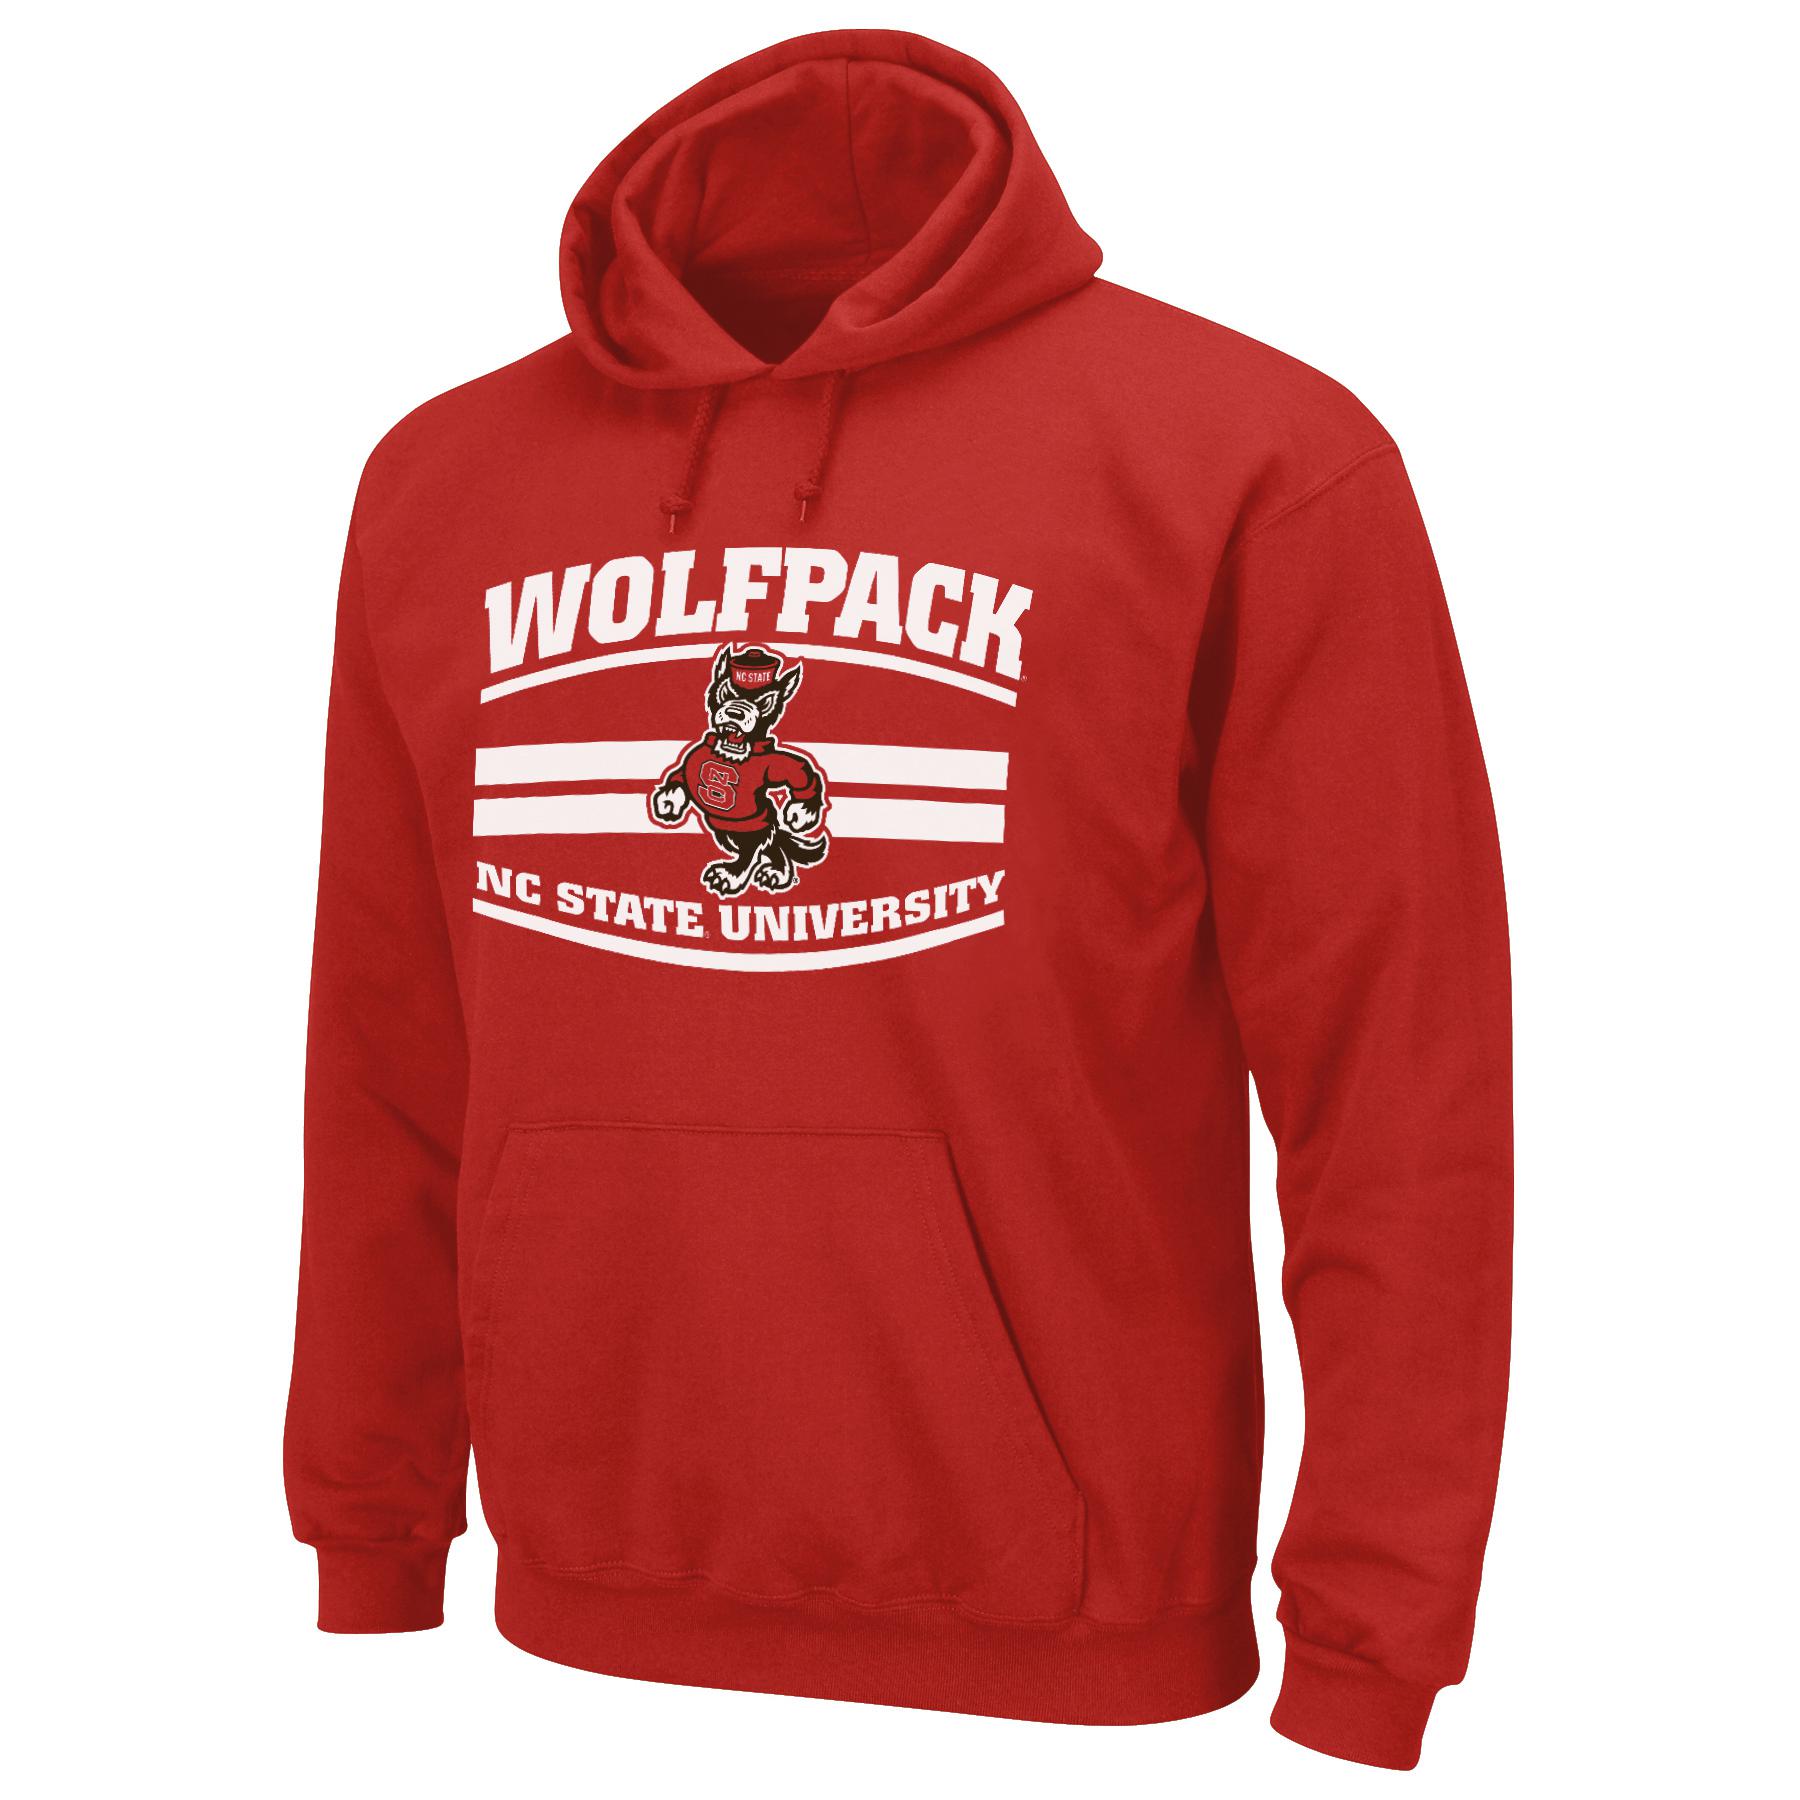 NCAA Men's Hooded Sweatshirt - North Carolina State University Wolfpack